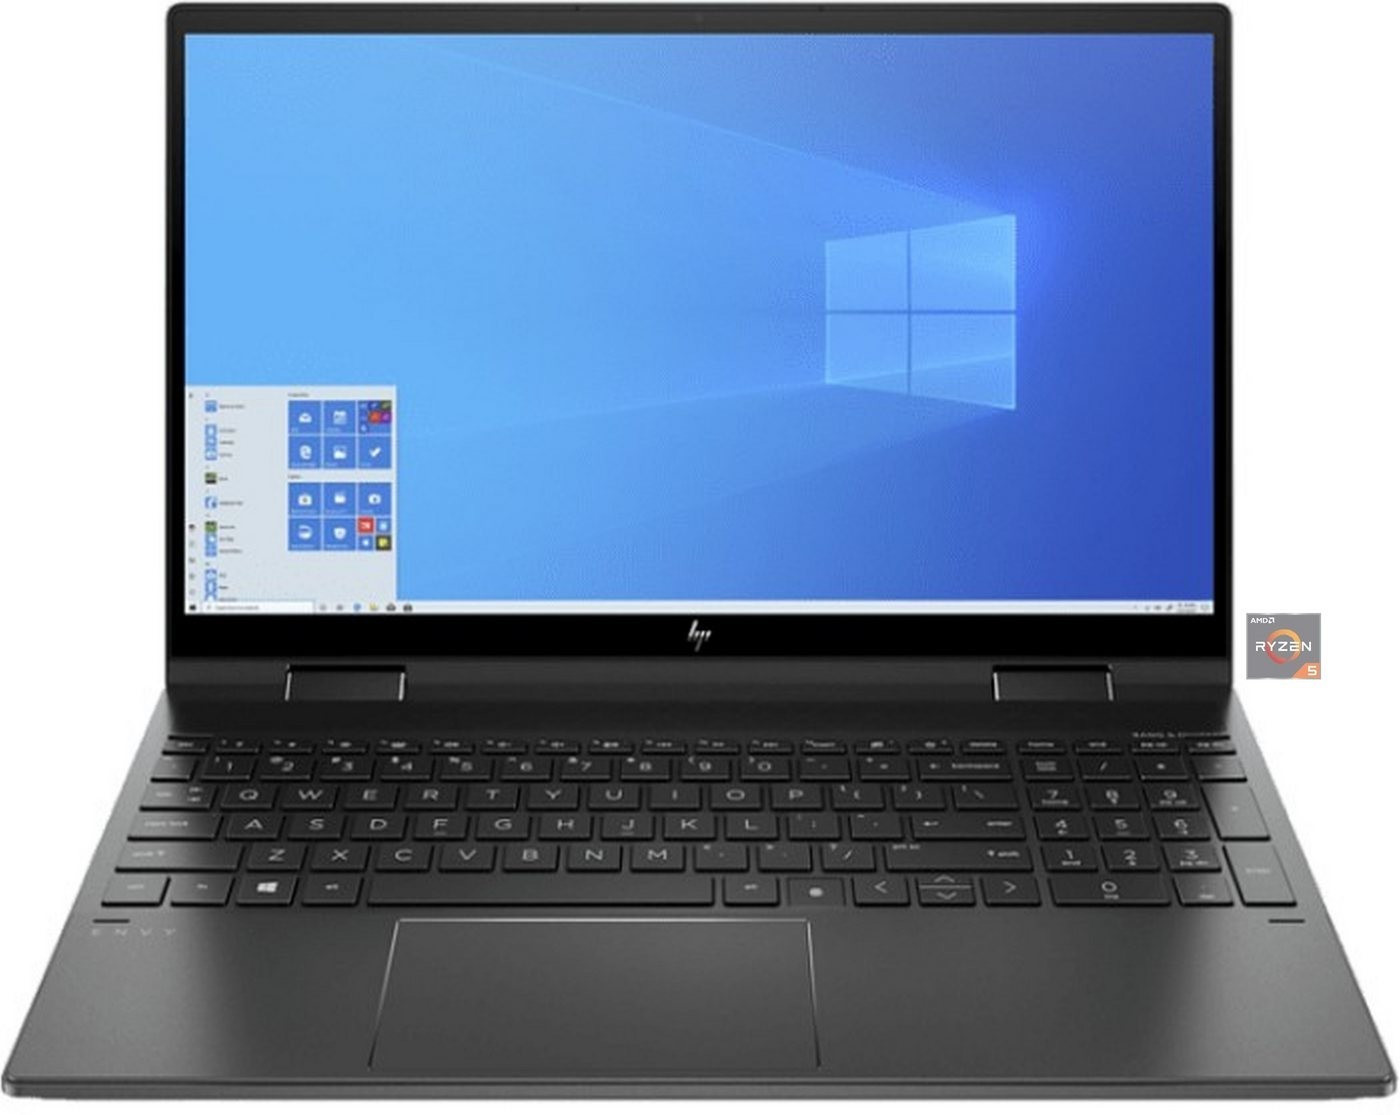 HP ENVY x360 15-ee0255ng (15,6 Zoll / FHD IPS Touch) Convertible Laptop (AMD Ryzen 5 4500U, 8GB DDR4 RAM, 512GB SSD, AMD Radeon Grafik) Windows 10 Home, Schwarz